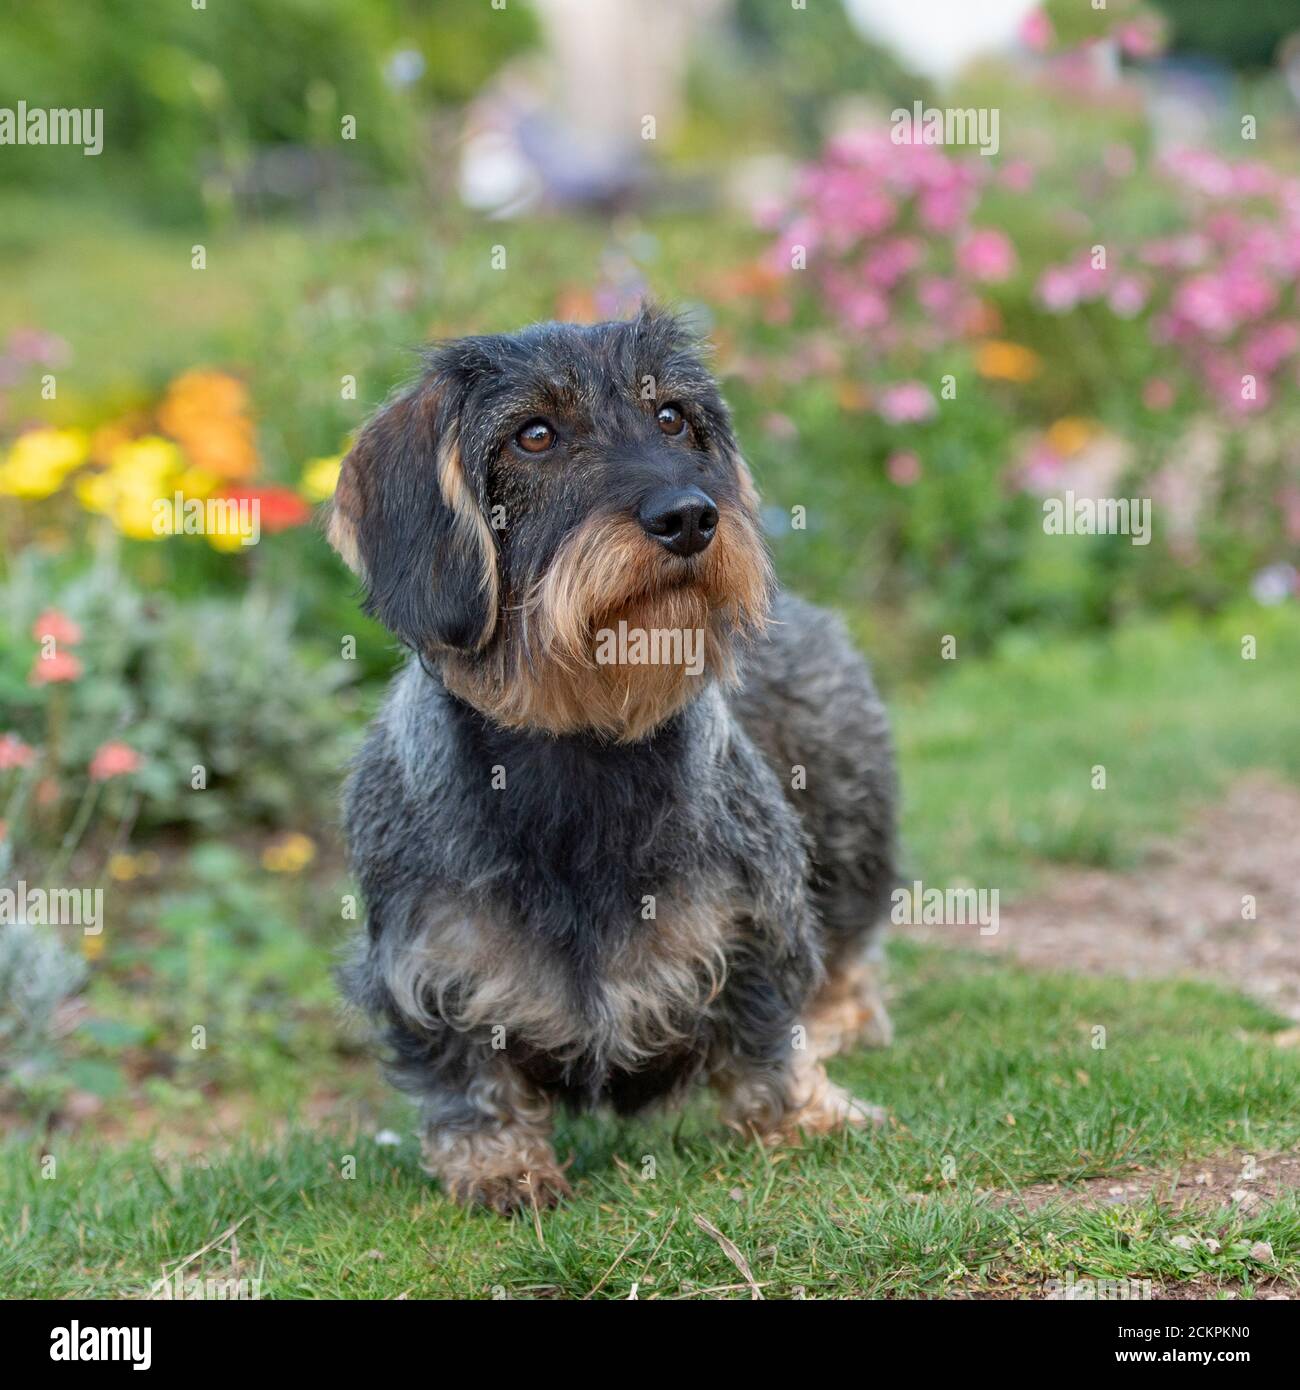 miniature wirehaired dachshund dog Stock Photo